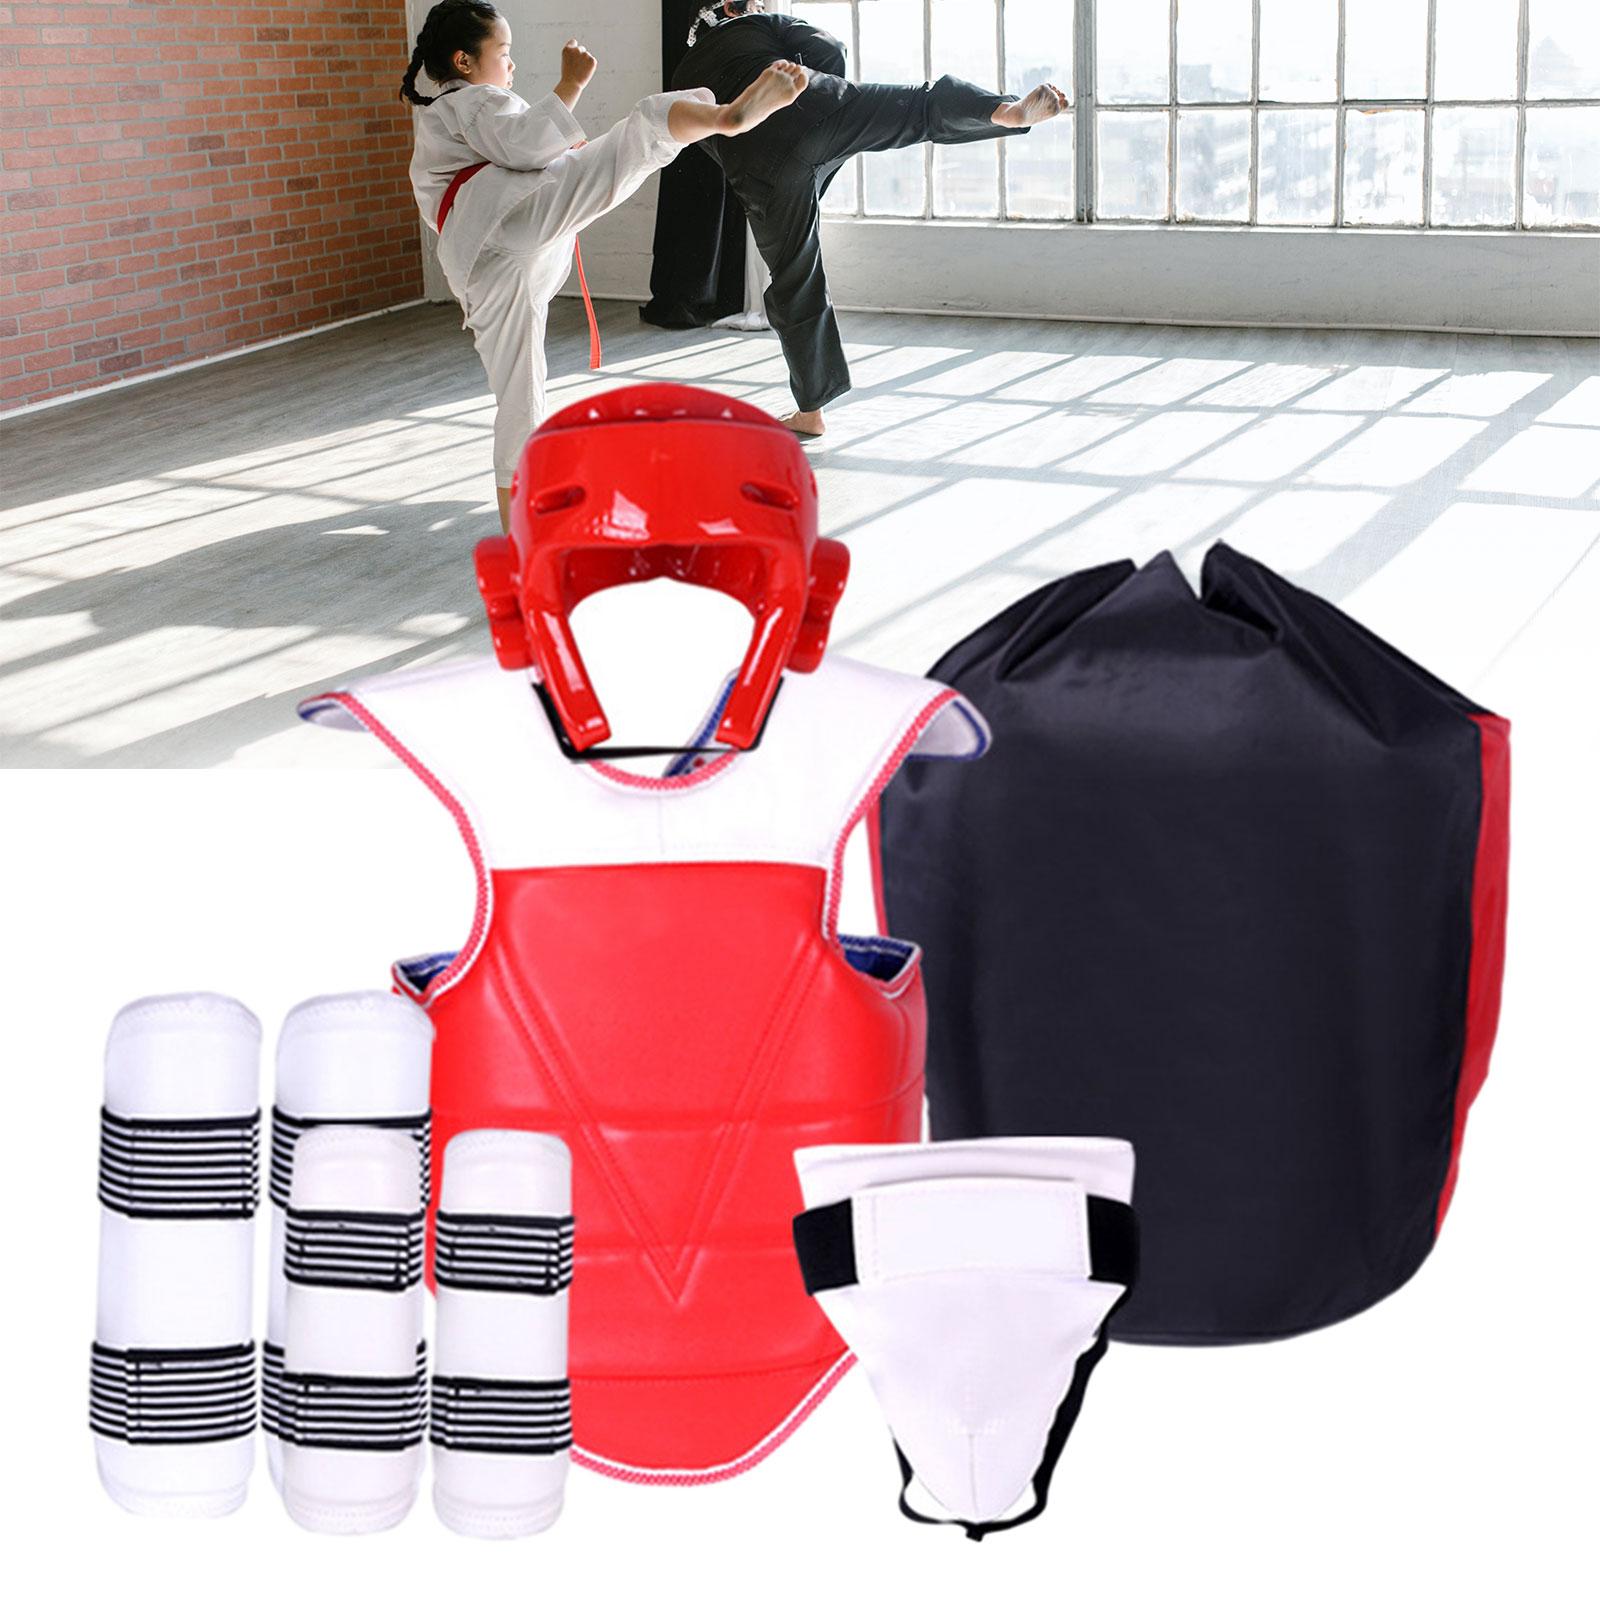 5Pcs Taekwondo Protective Gear for Martial Arts Sparring Training Muay Thai XXL